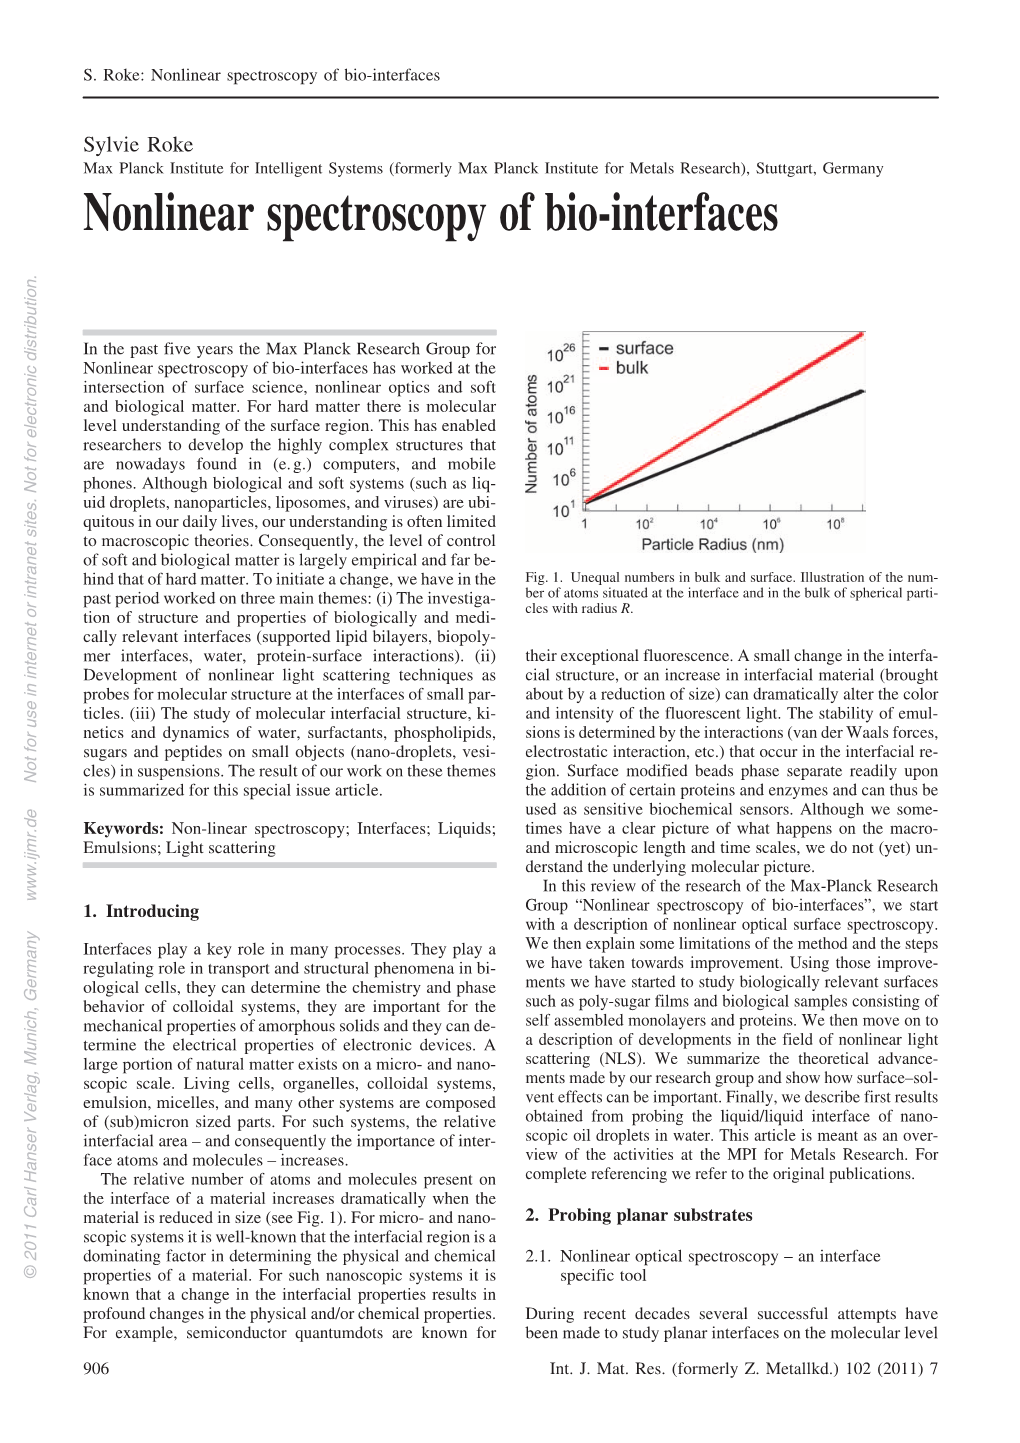 Nonlinear Spectroscopy of Bio-Interfaces